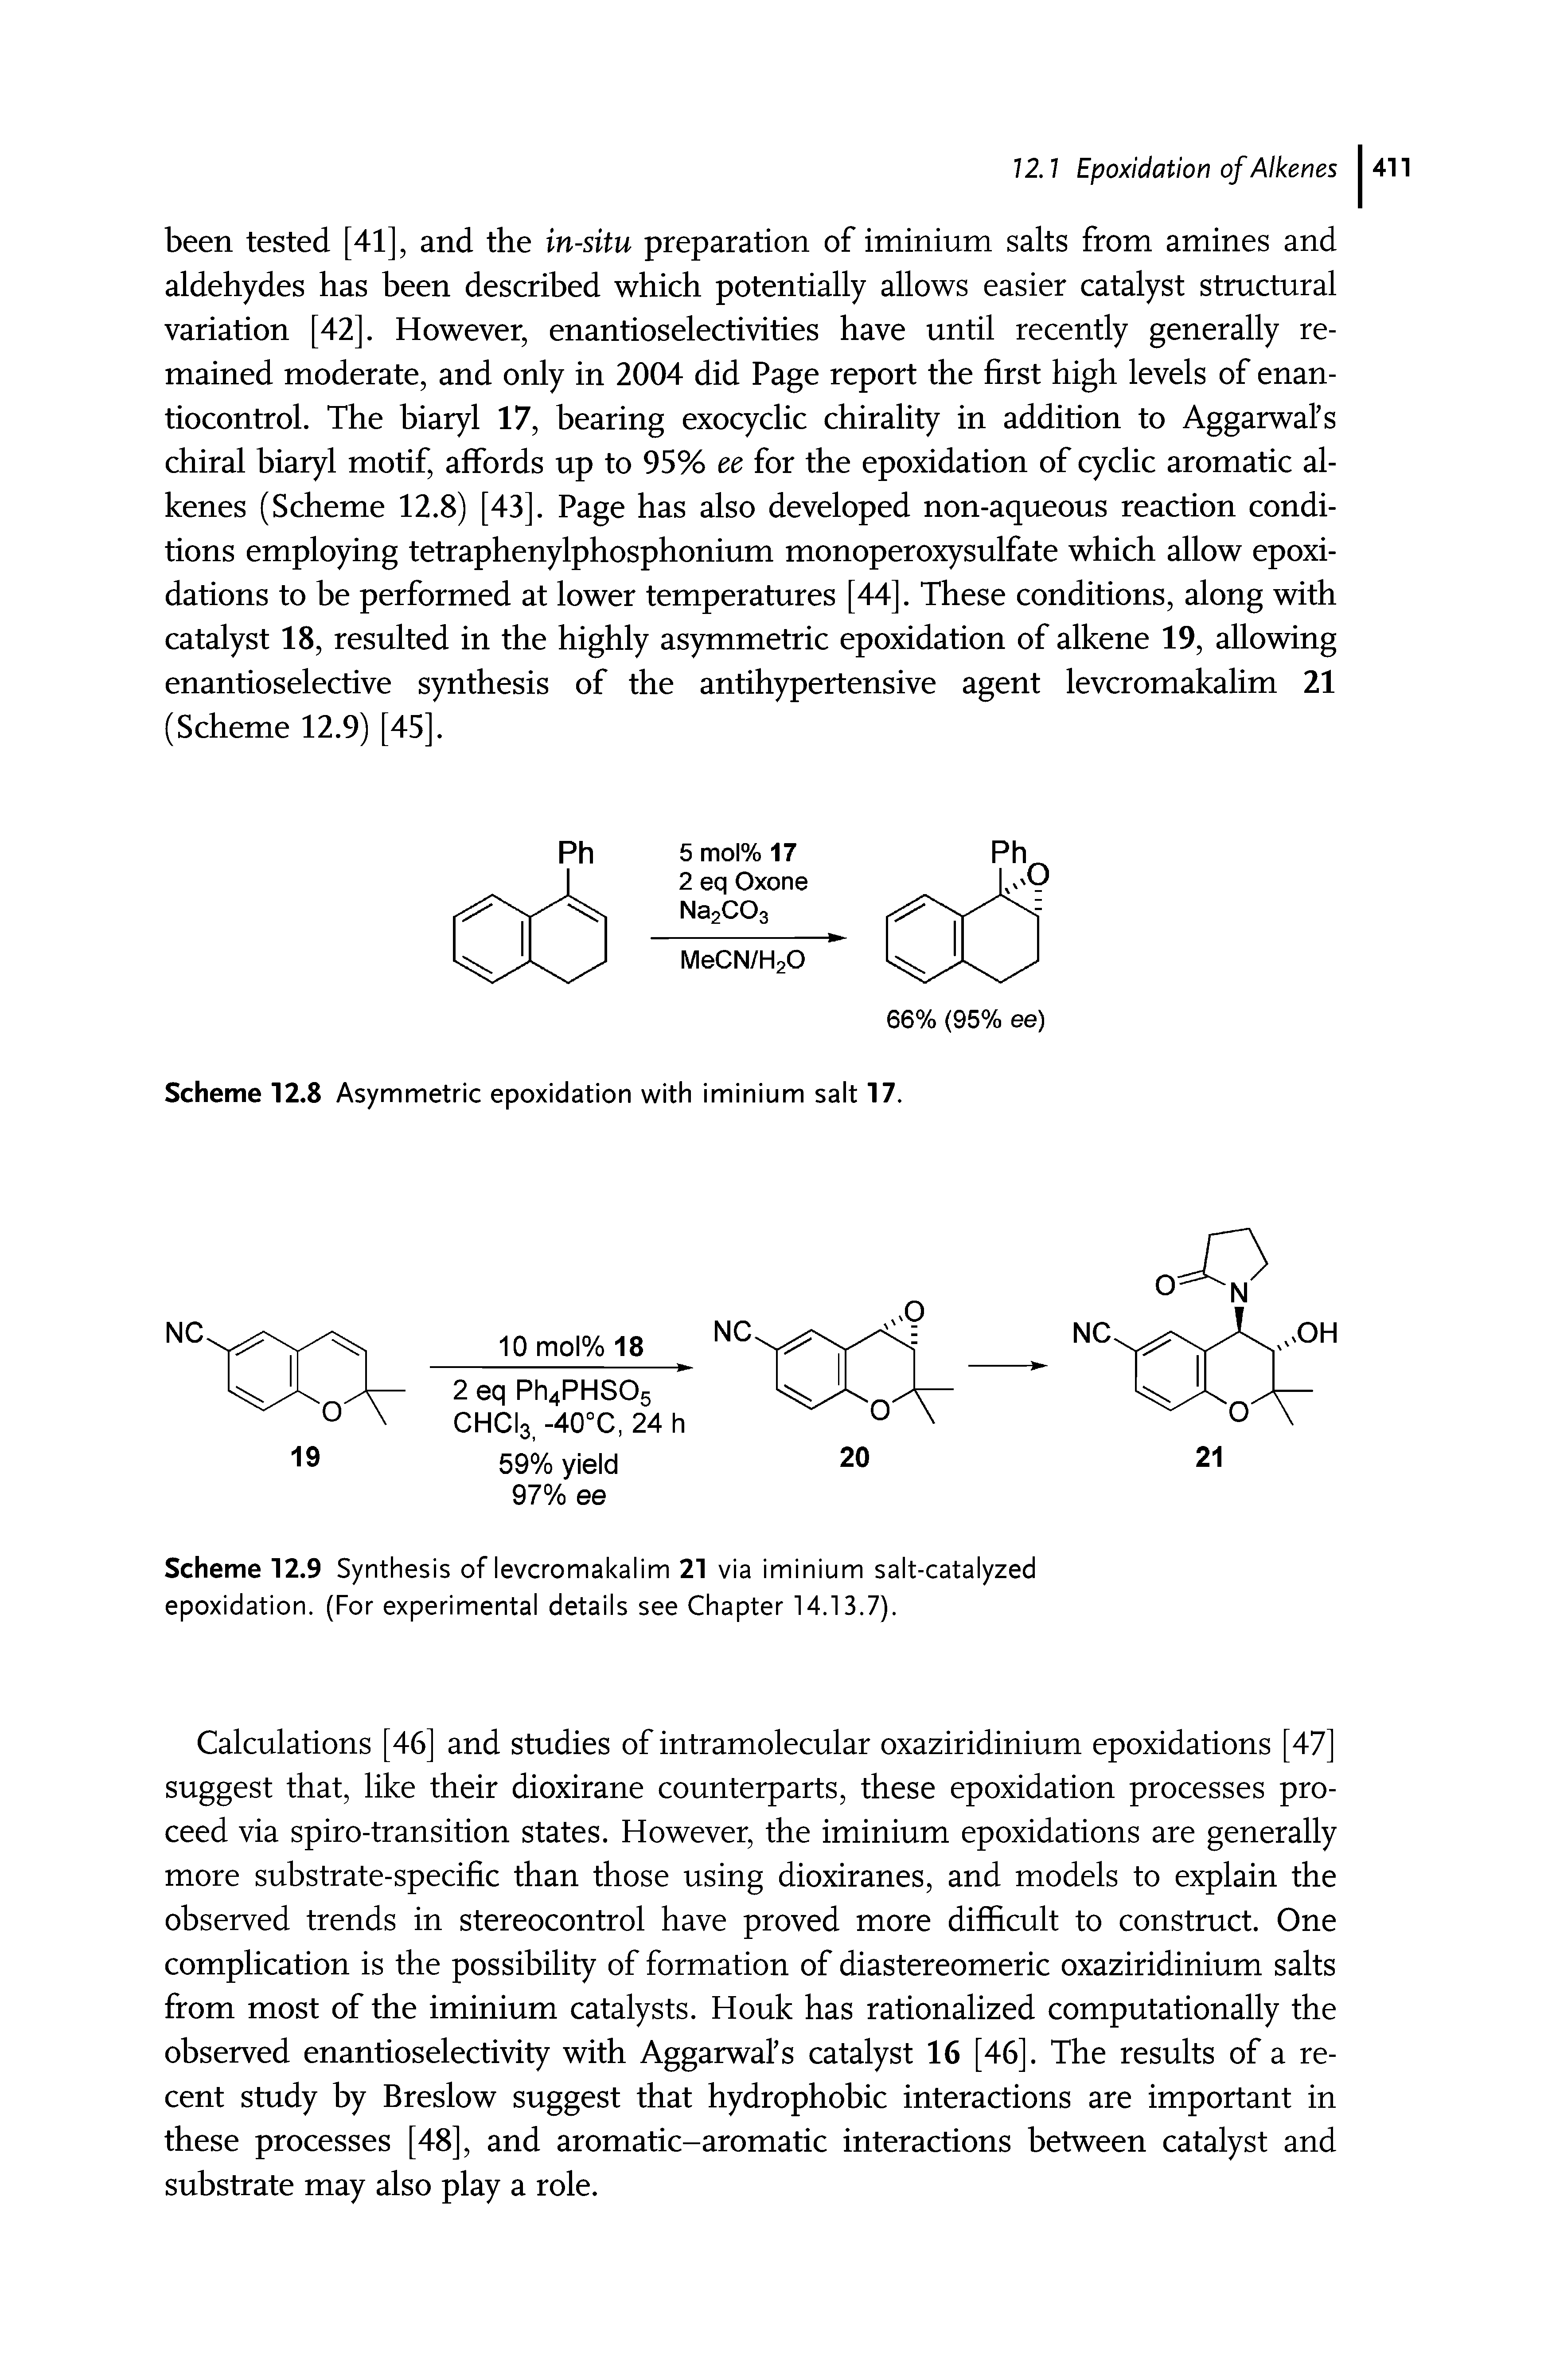 Scheme 12.9 Synthesis of levcromakalim 21 via iminium salt-catalyzed epoxidation. (For experimental details see Chapter 14.13.7).